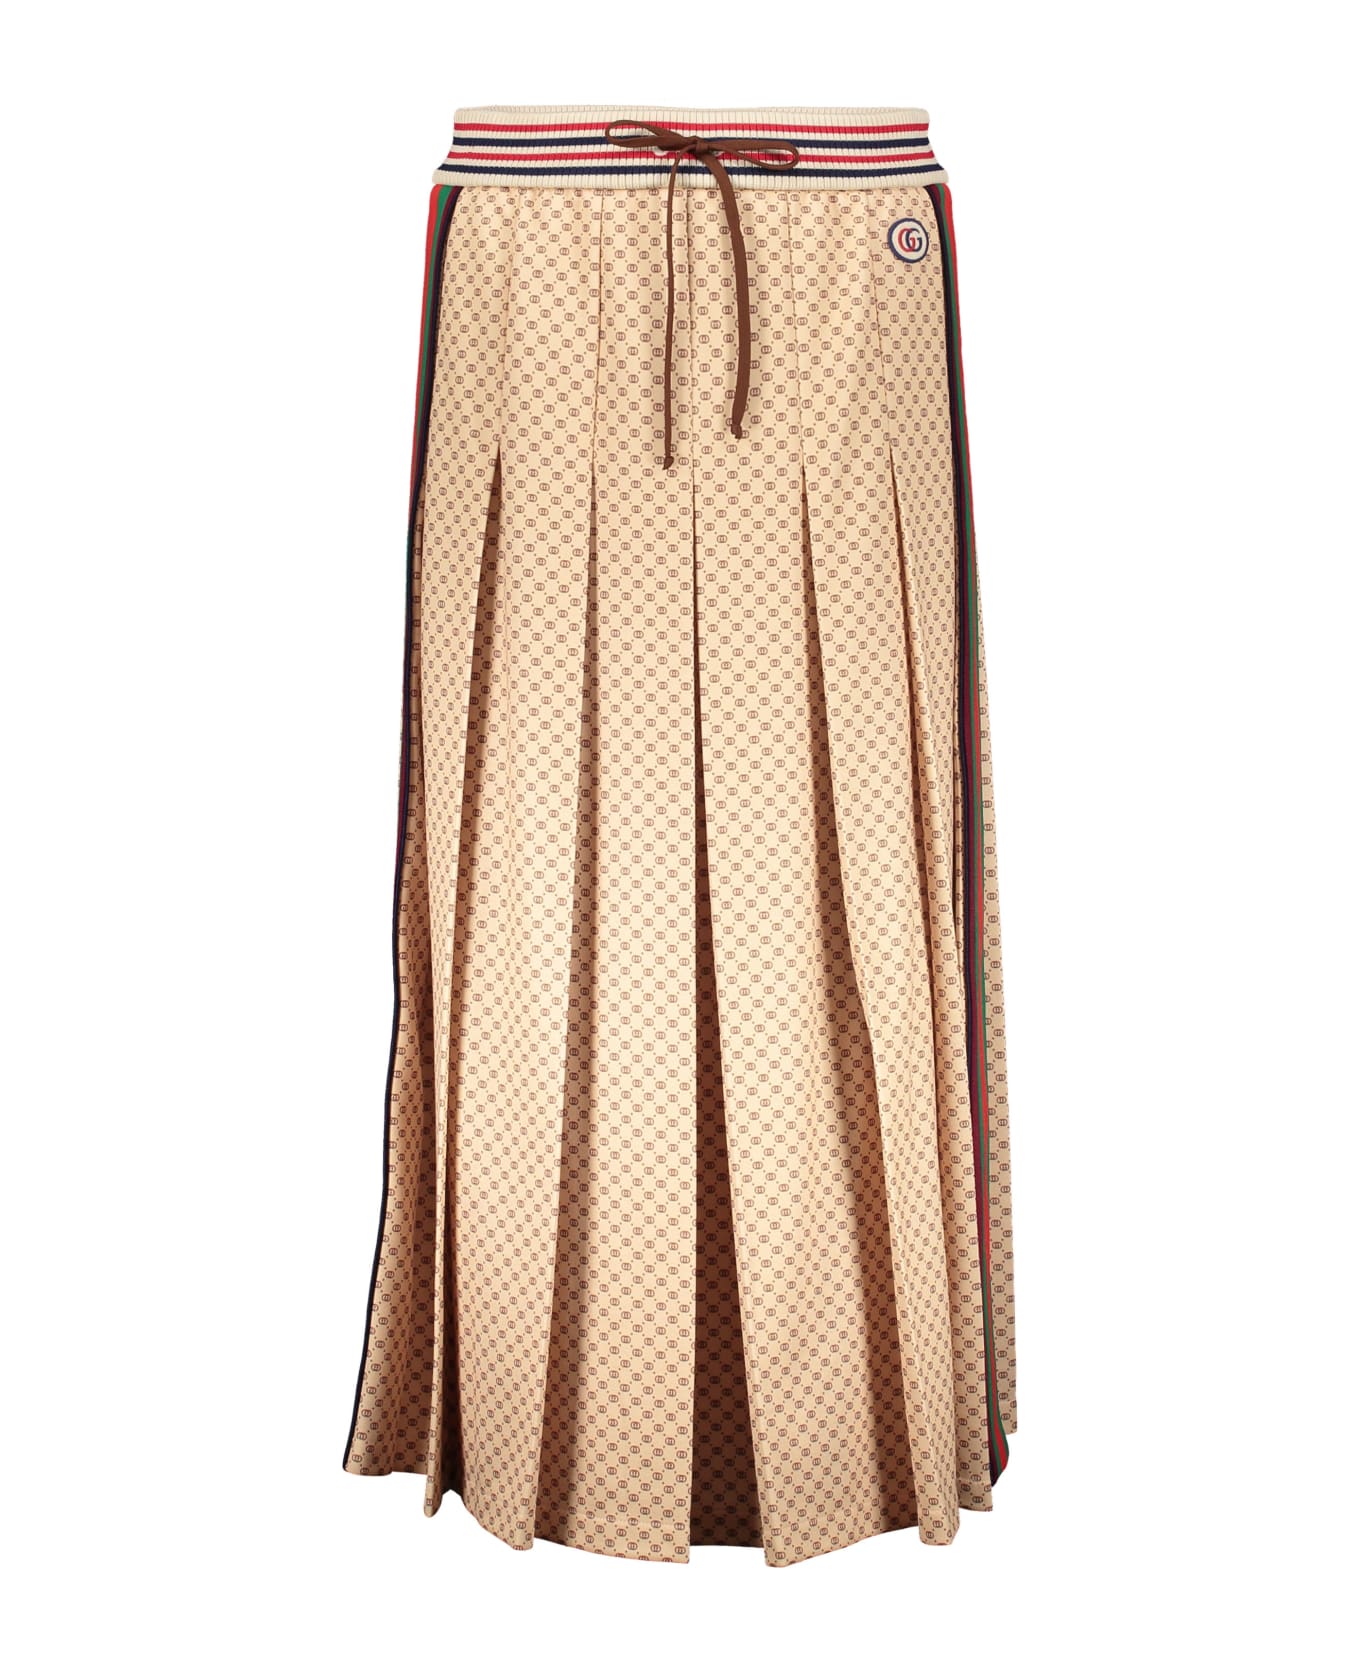 Gucci Printed Pleated Skirt - Beige スカート